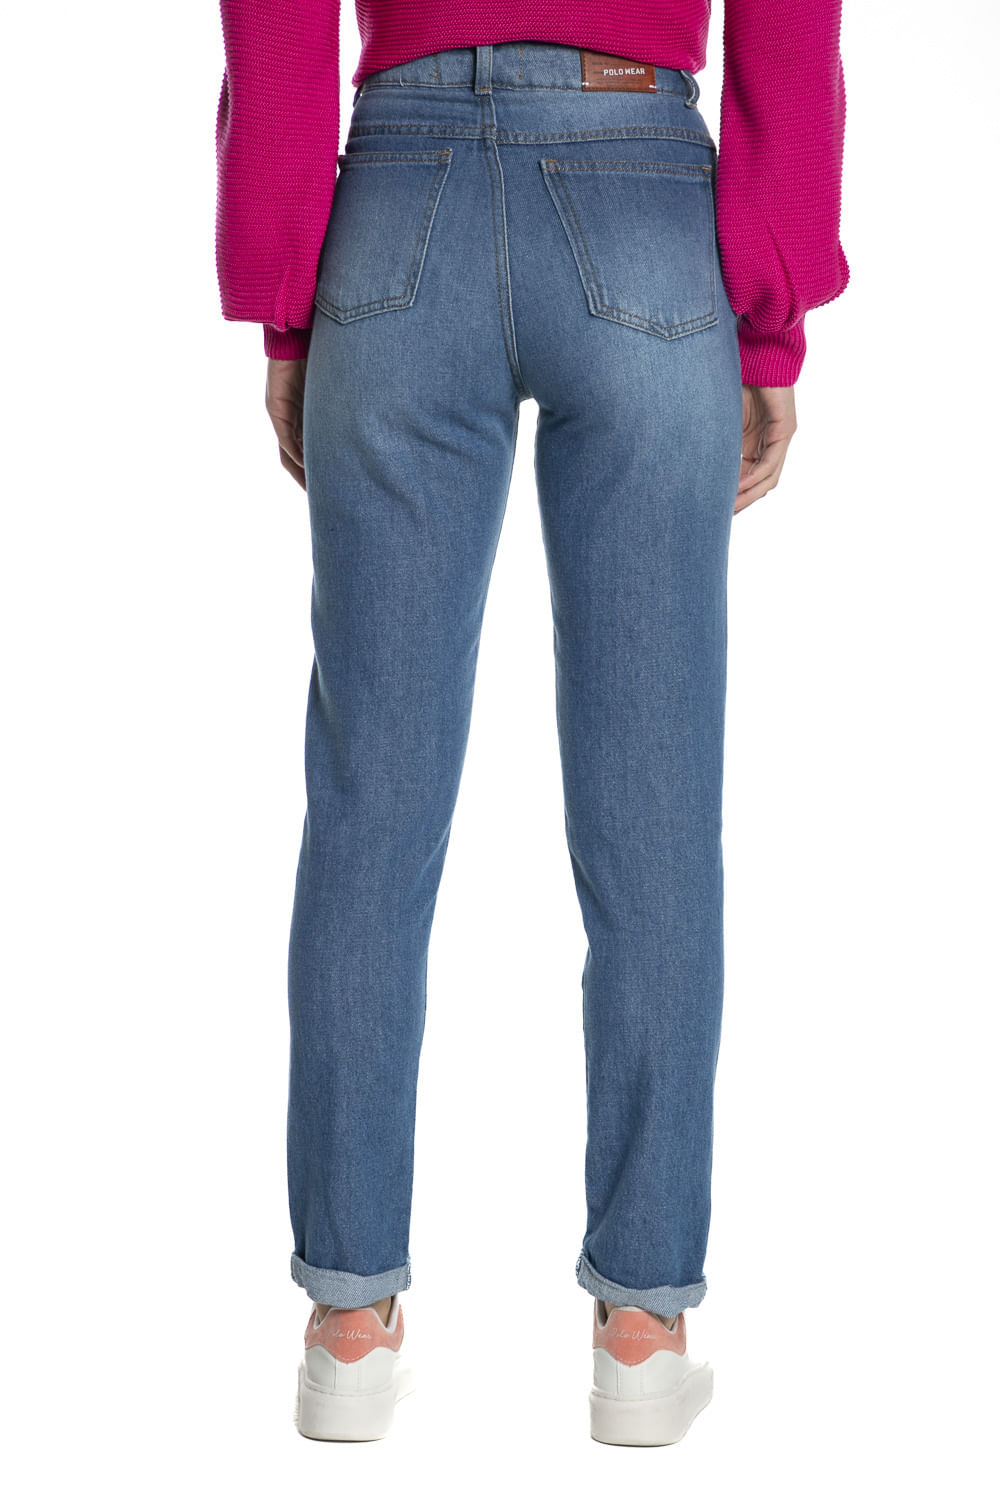 Calça Feminina Jeans Jogger Delavé Polo Wear - Polo Wear